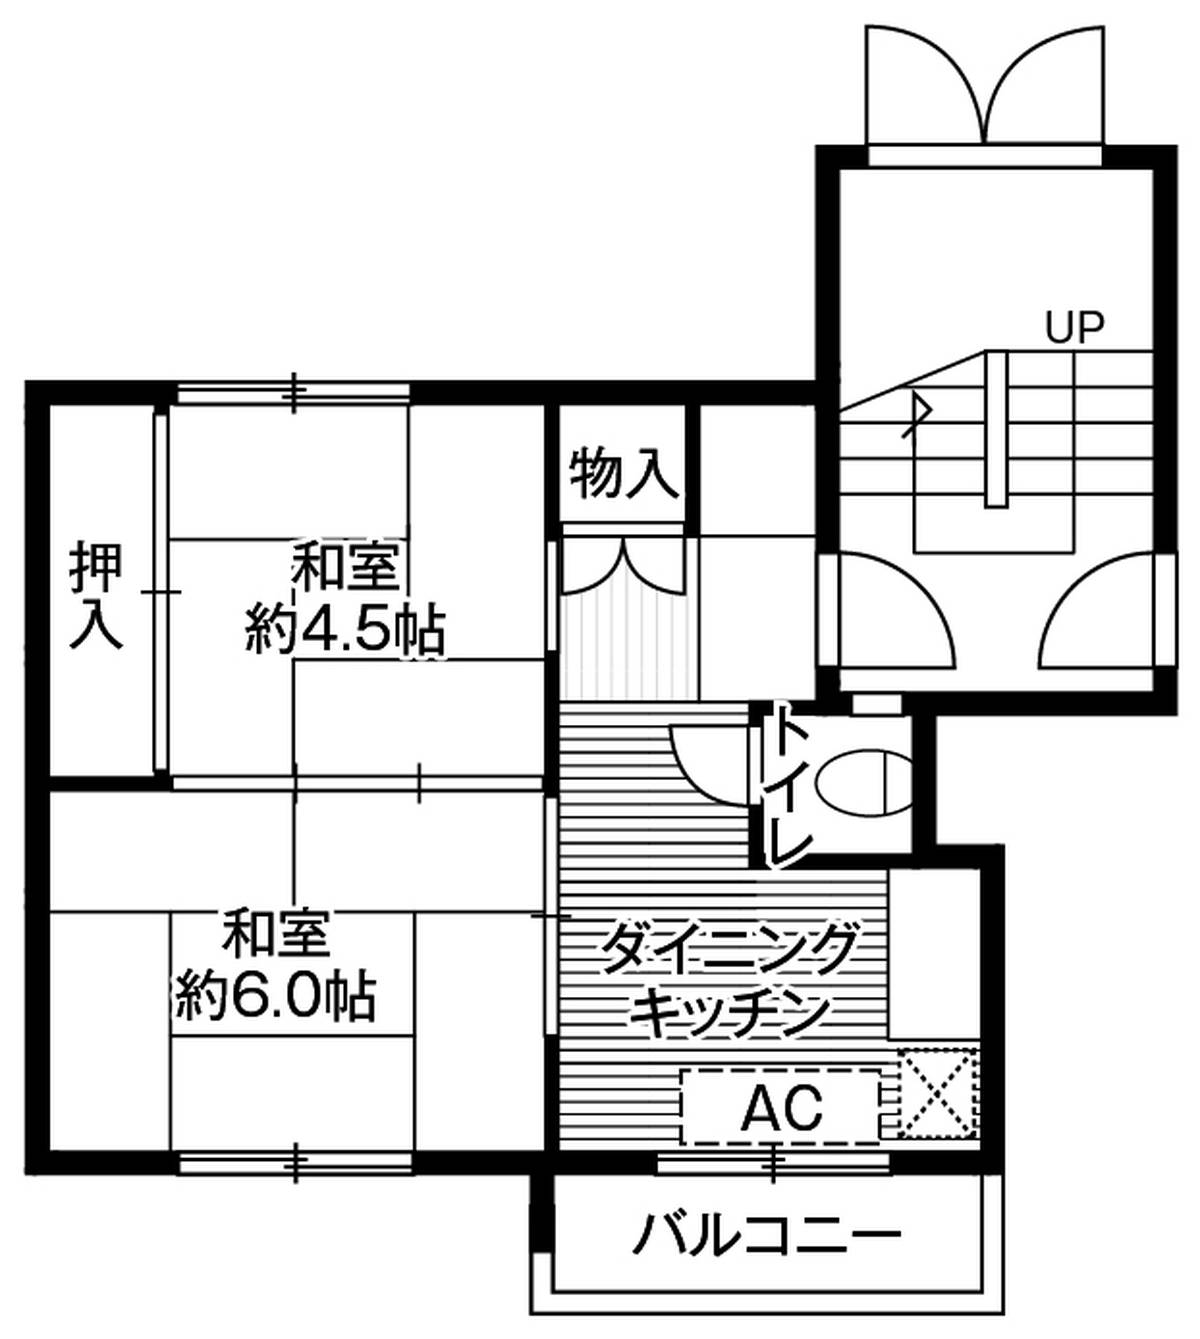 2K floorplan of Village House Daikoku in Wakkanai-shi